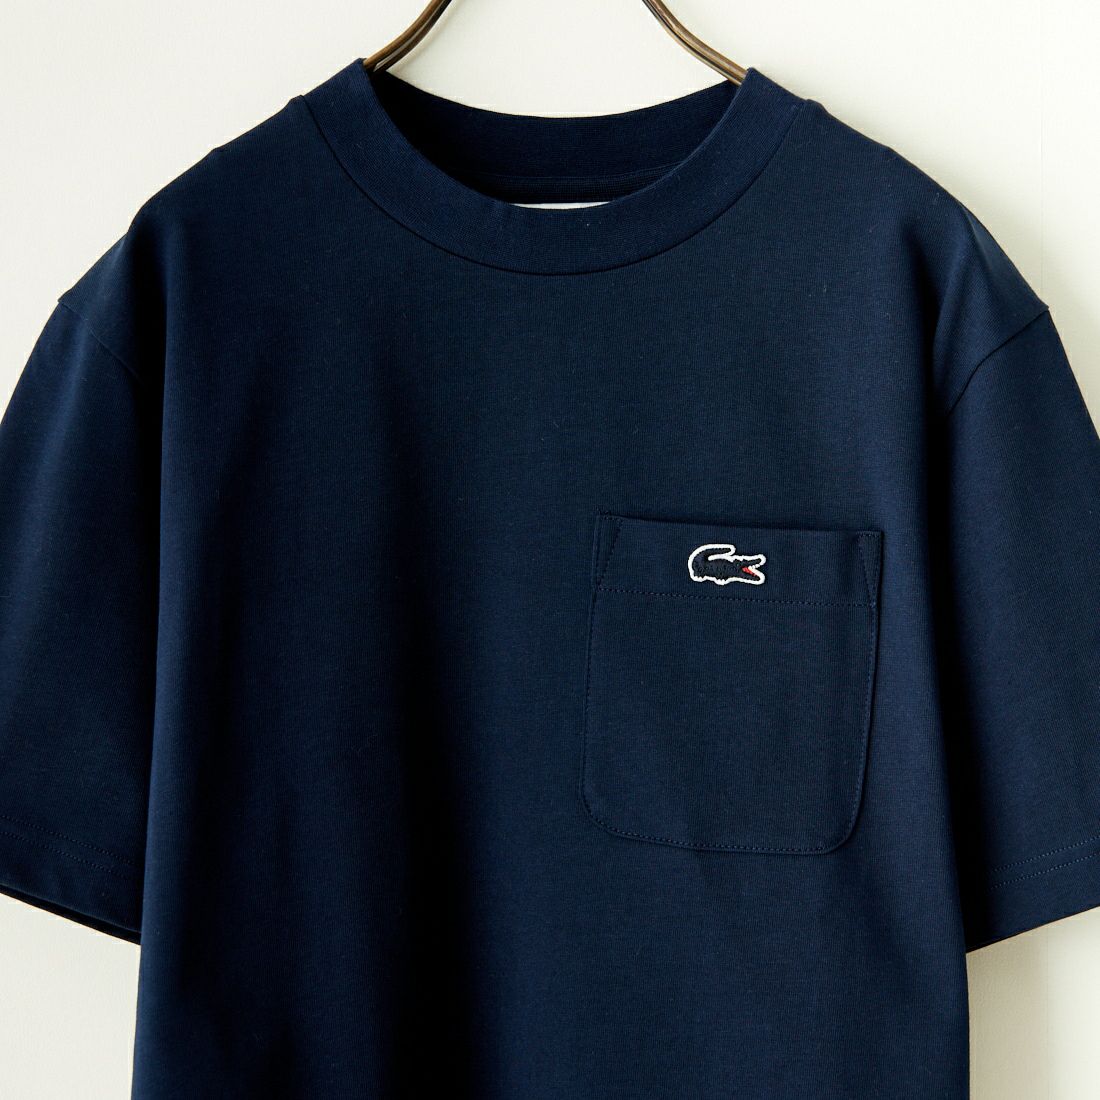 LACOSTE [ラコステ] アウトラインクロックポケットTシャツ [TH5581] 166 NAVY B